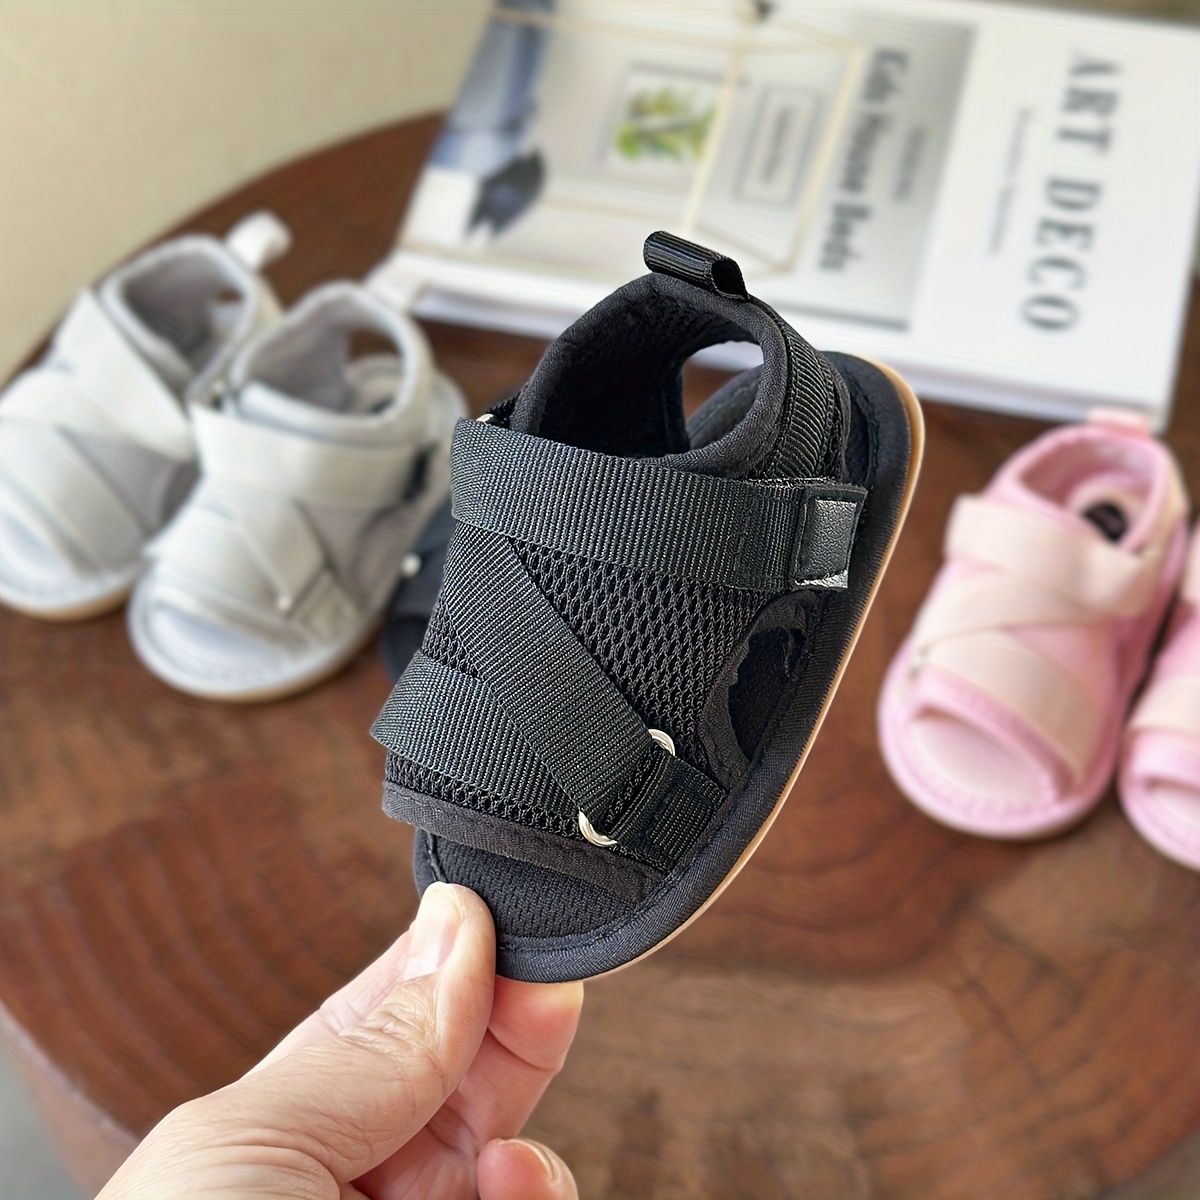 Newborn baby shoes